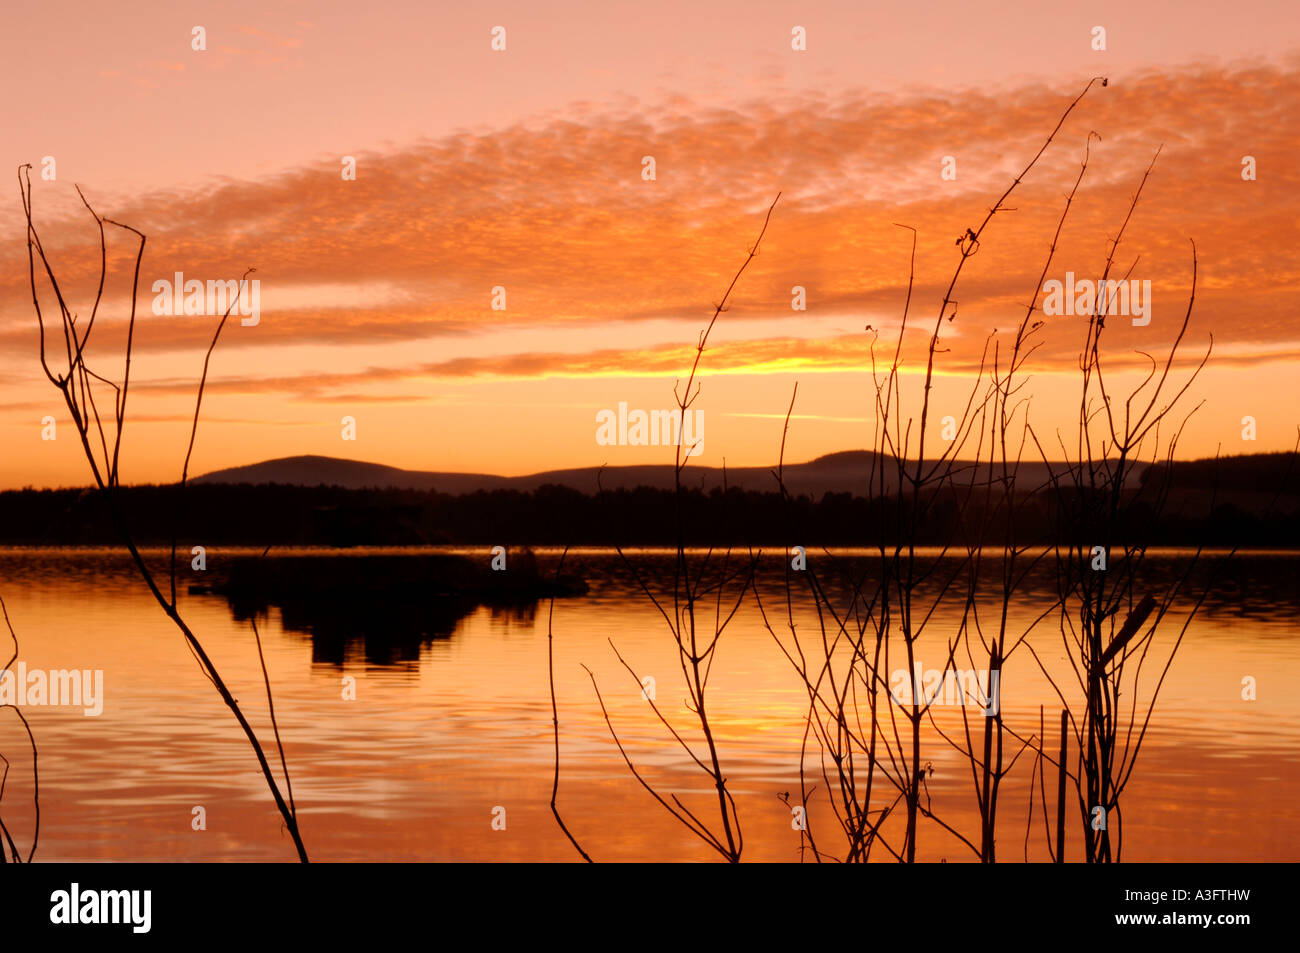 sunset-loch-of-skene-xpl-4604-433-stock-photo-alamy